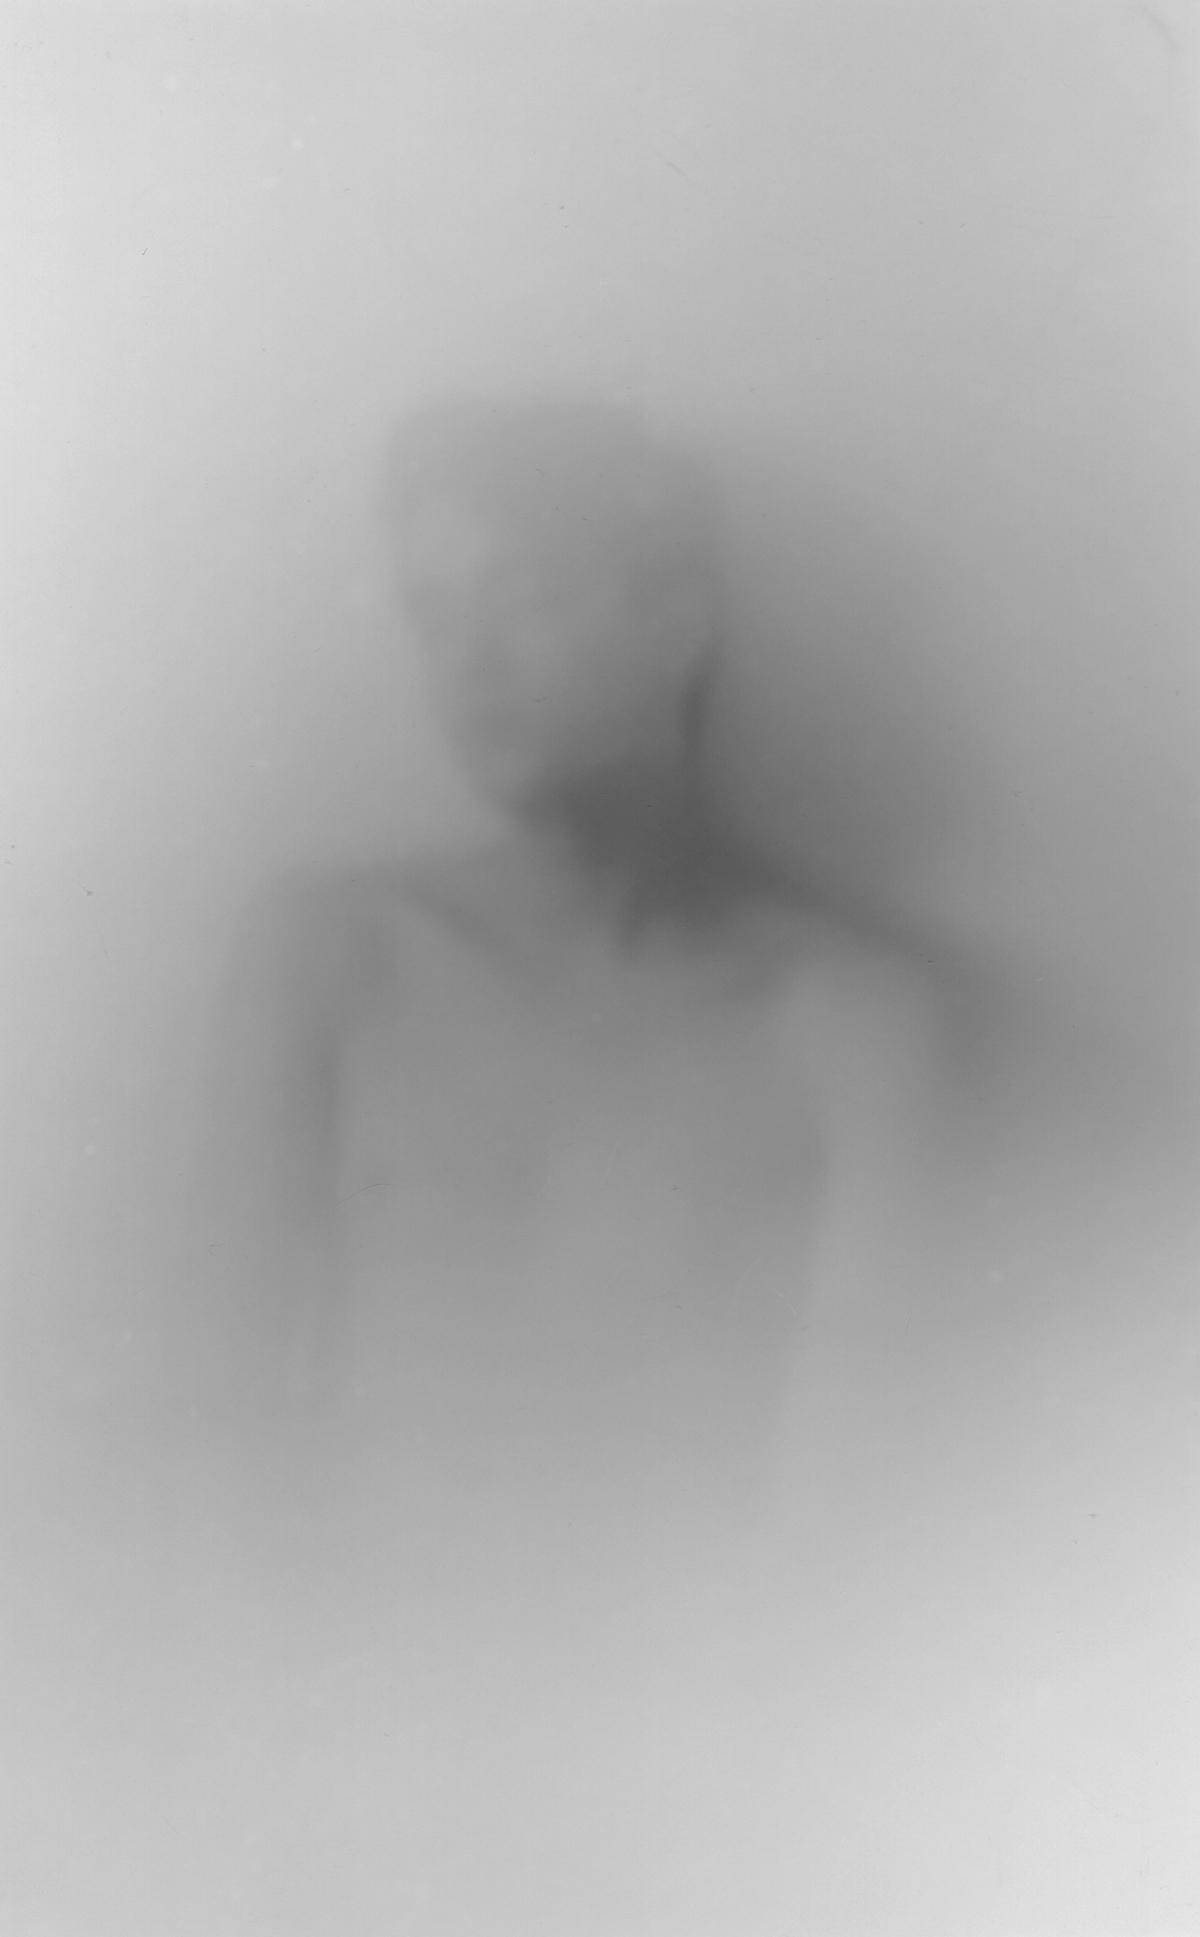 darkroom body portrait black and white